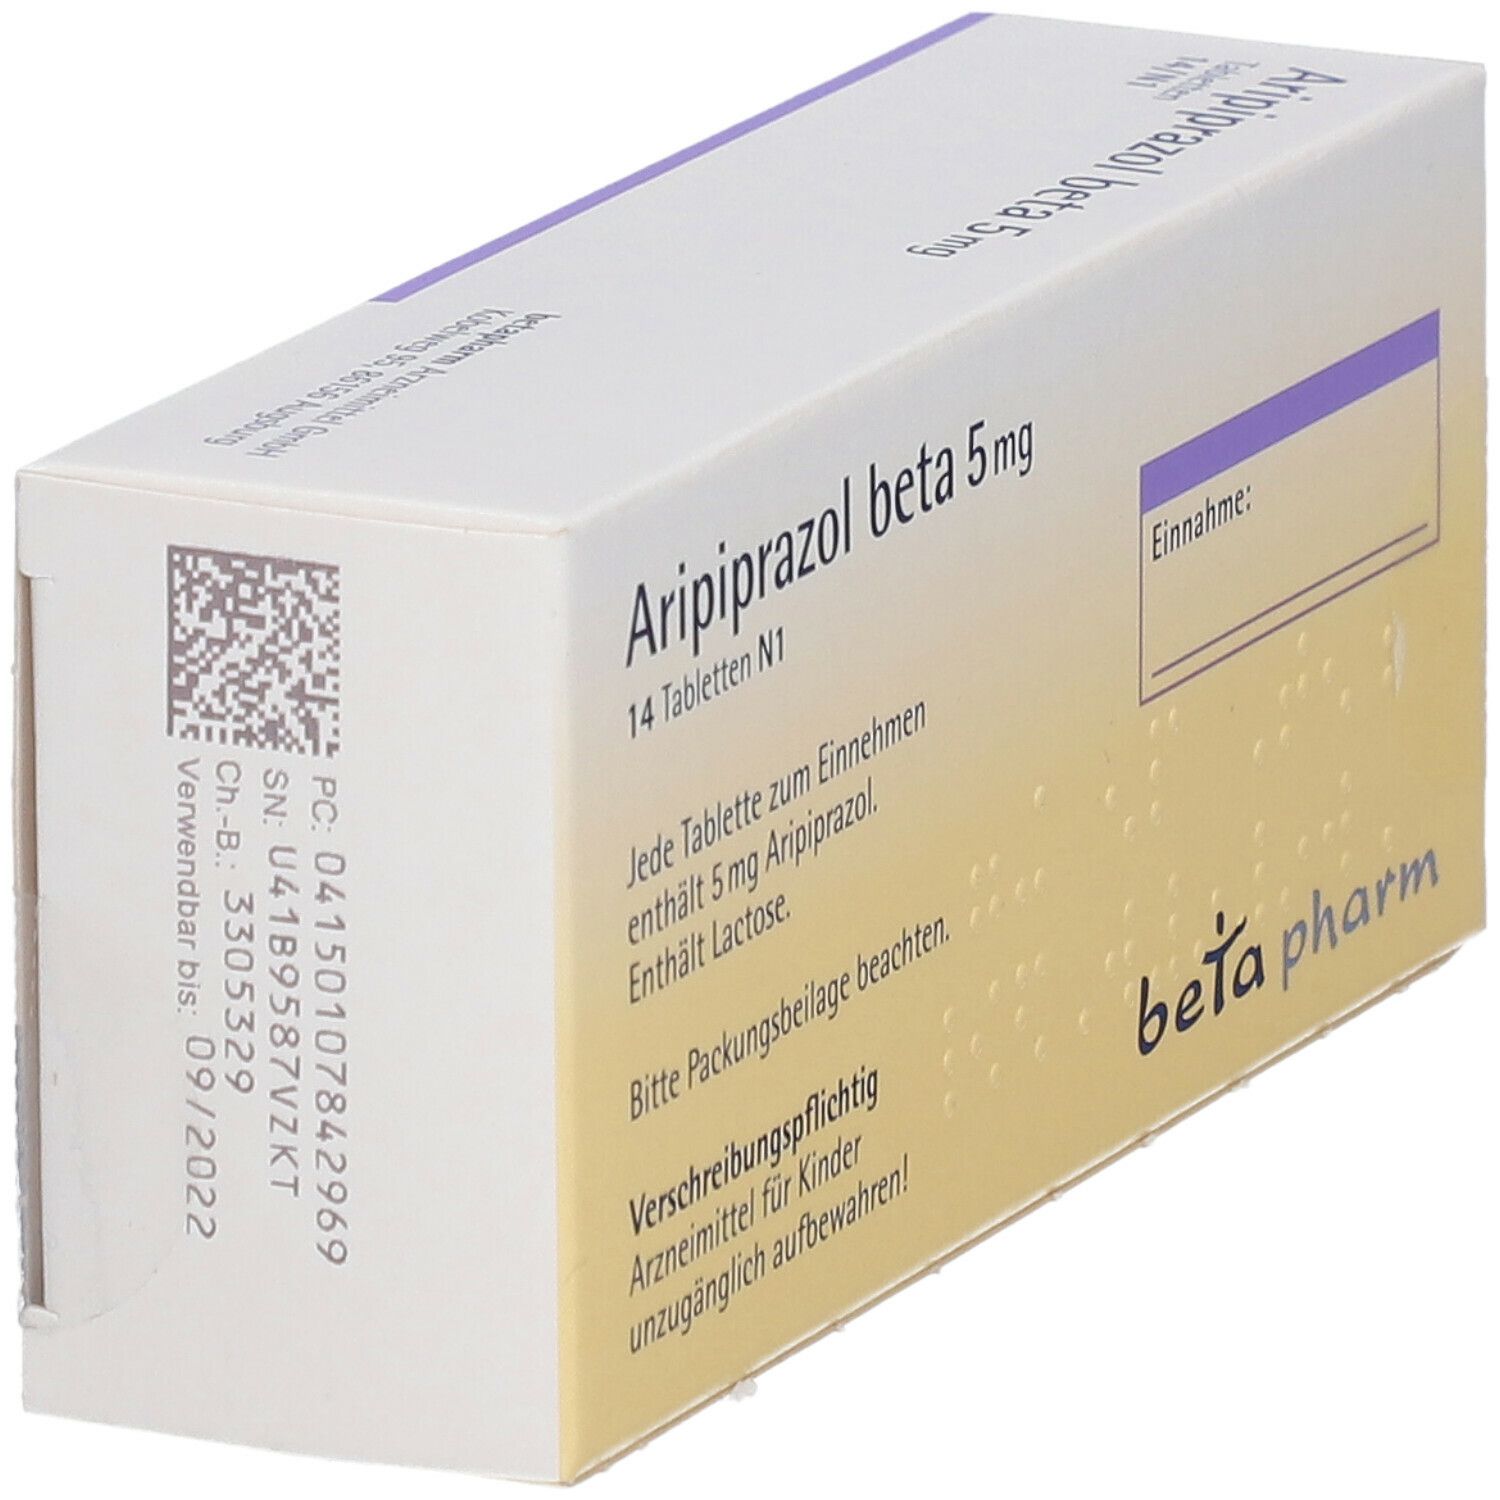 Aripiprazol beta 5 mg